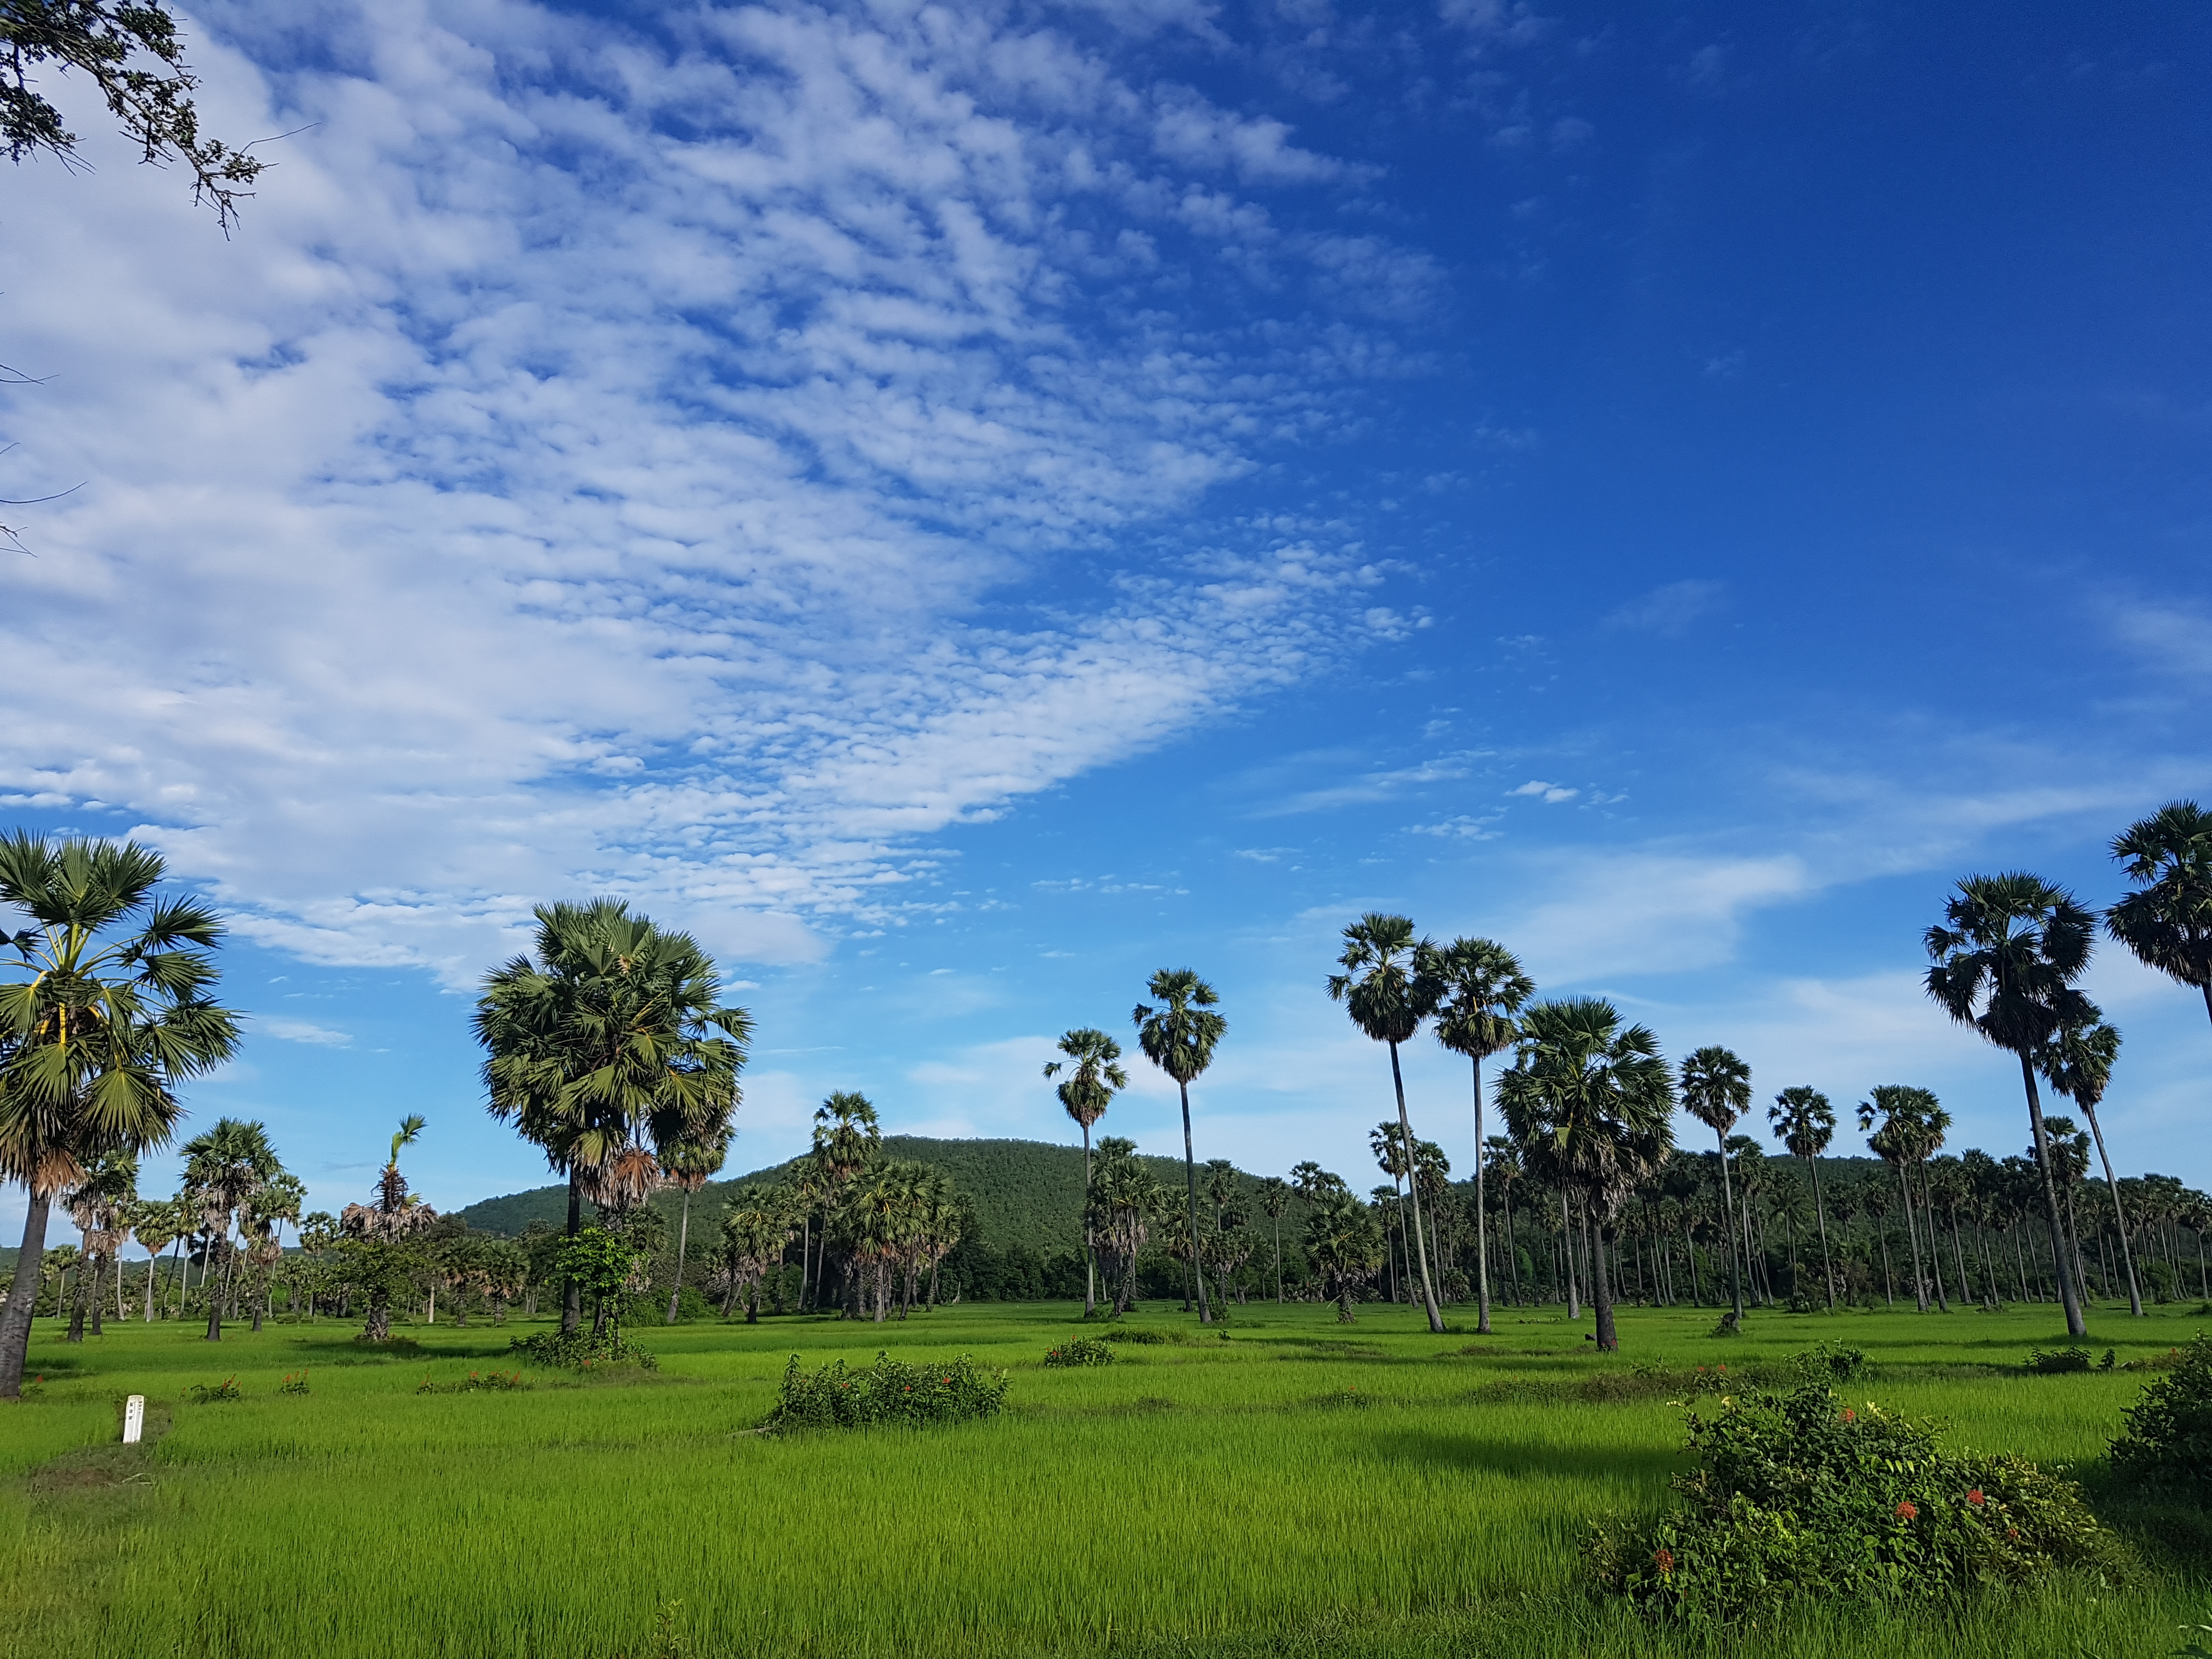 Forest in Cambodia